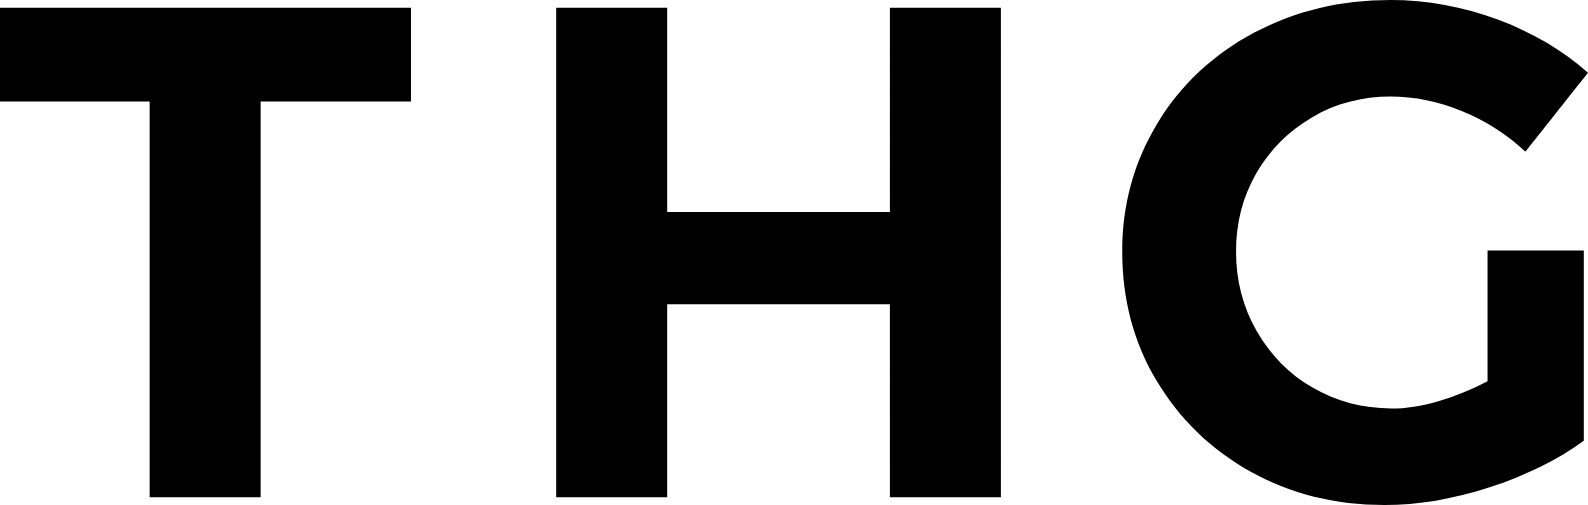 THG (The Hut Group) logo (PNG transparent)